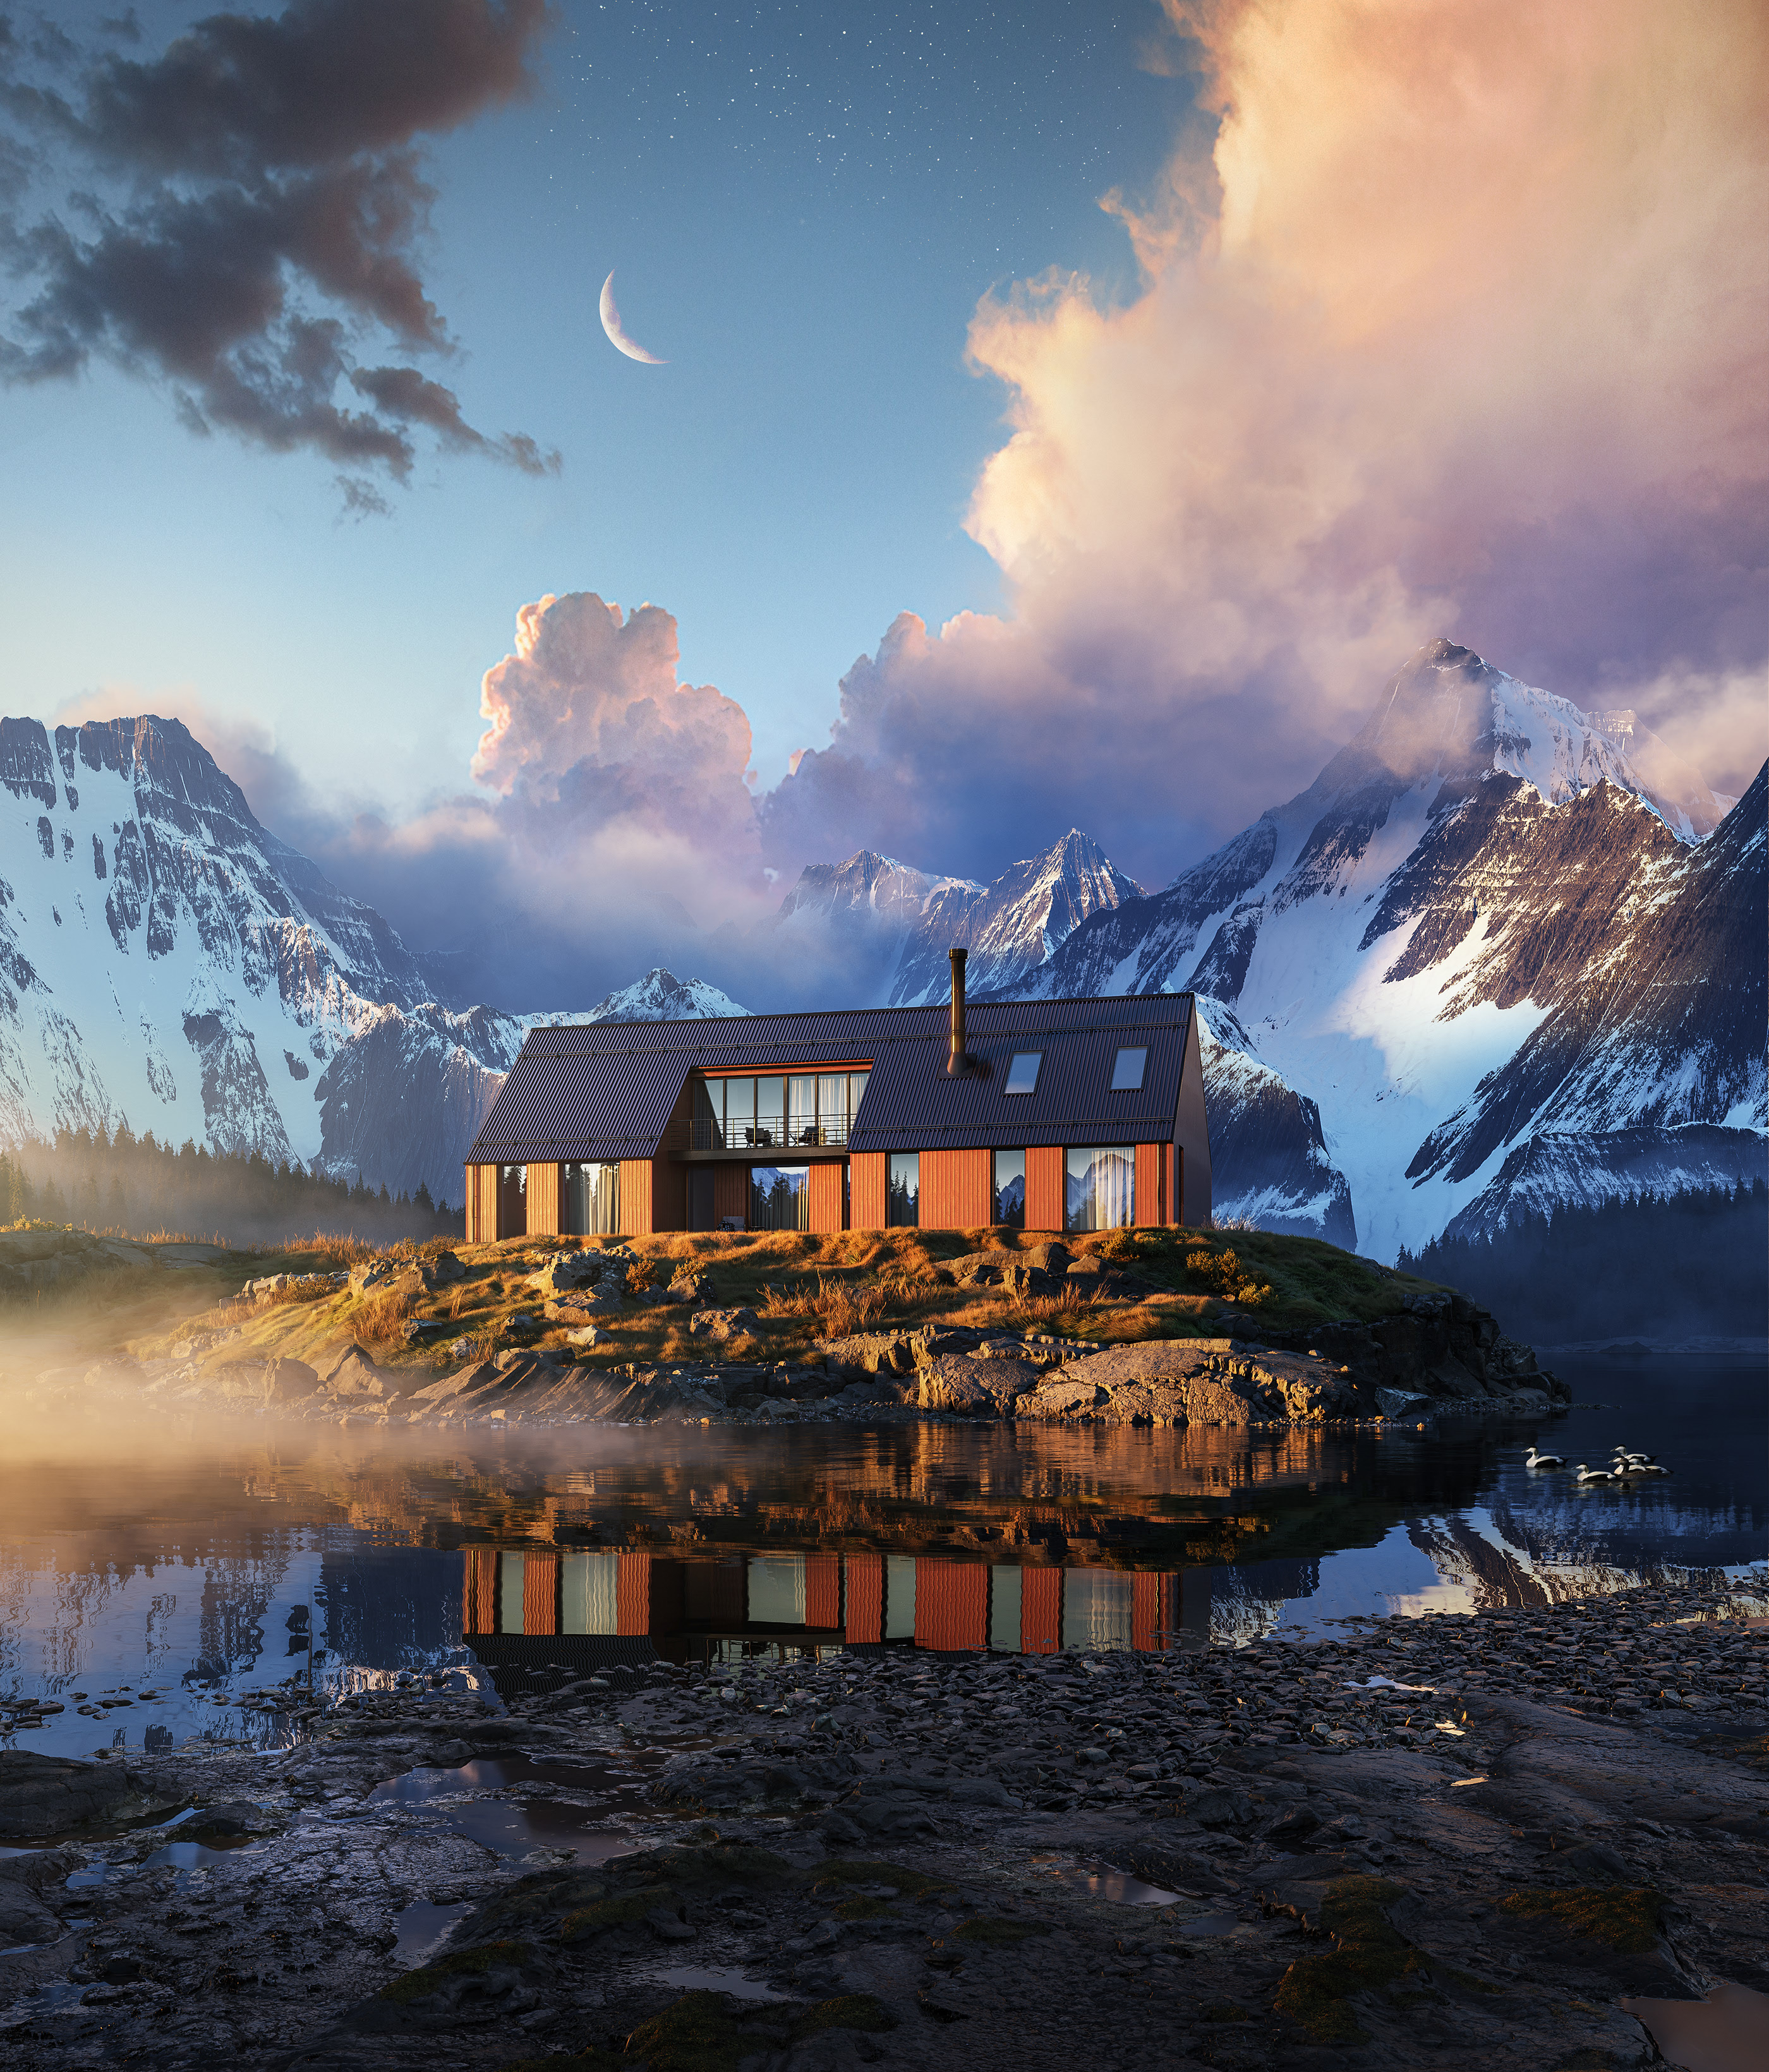 General 2800x3280 Norway Europe digital art artwork landscape mountains snow lake house reflection Moon CGI